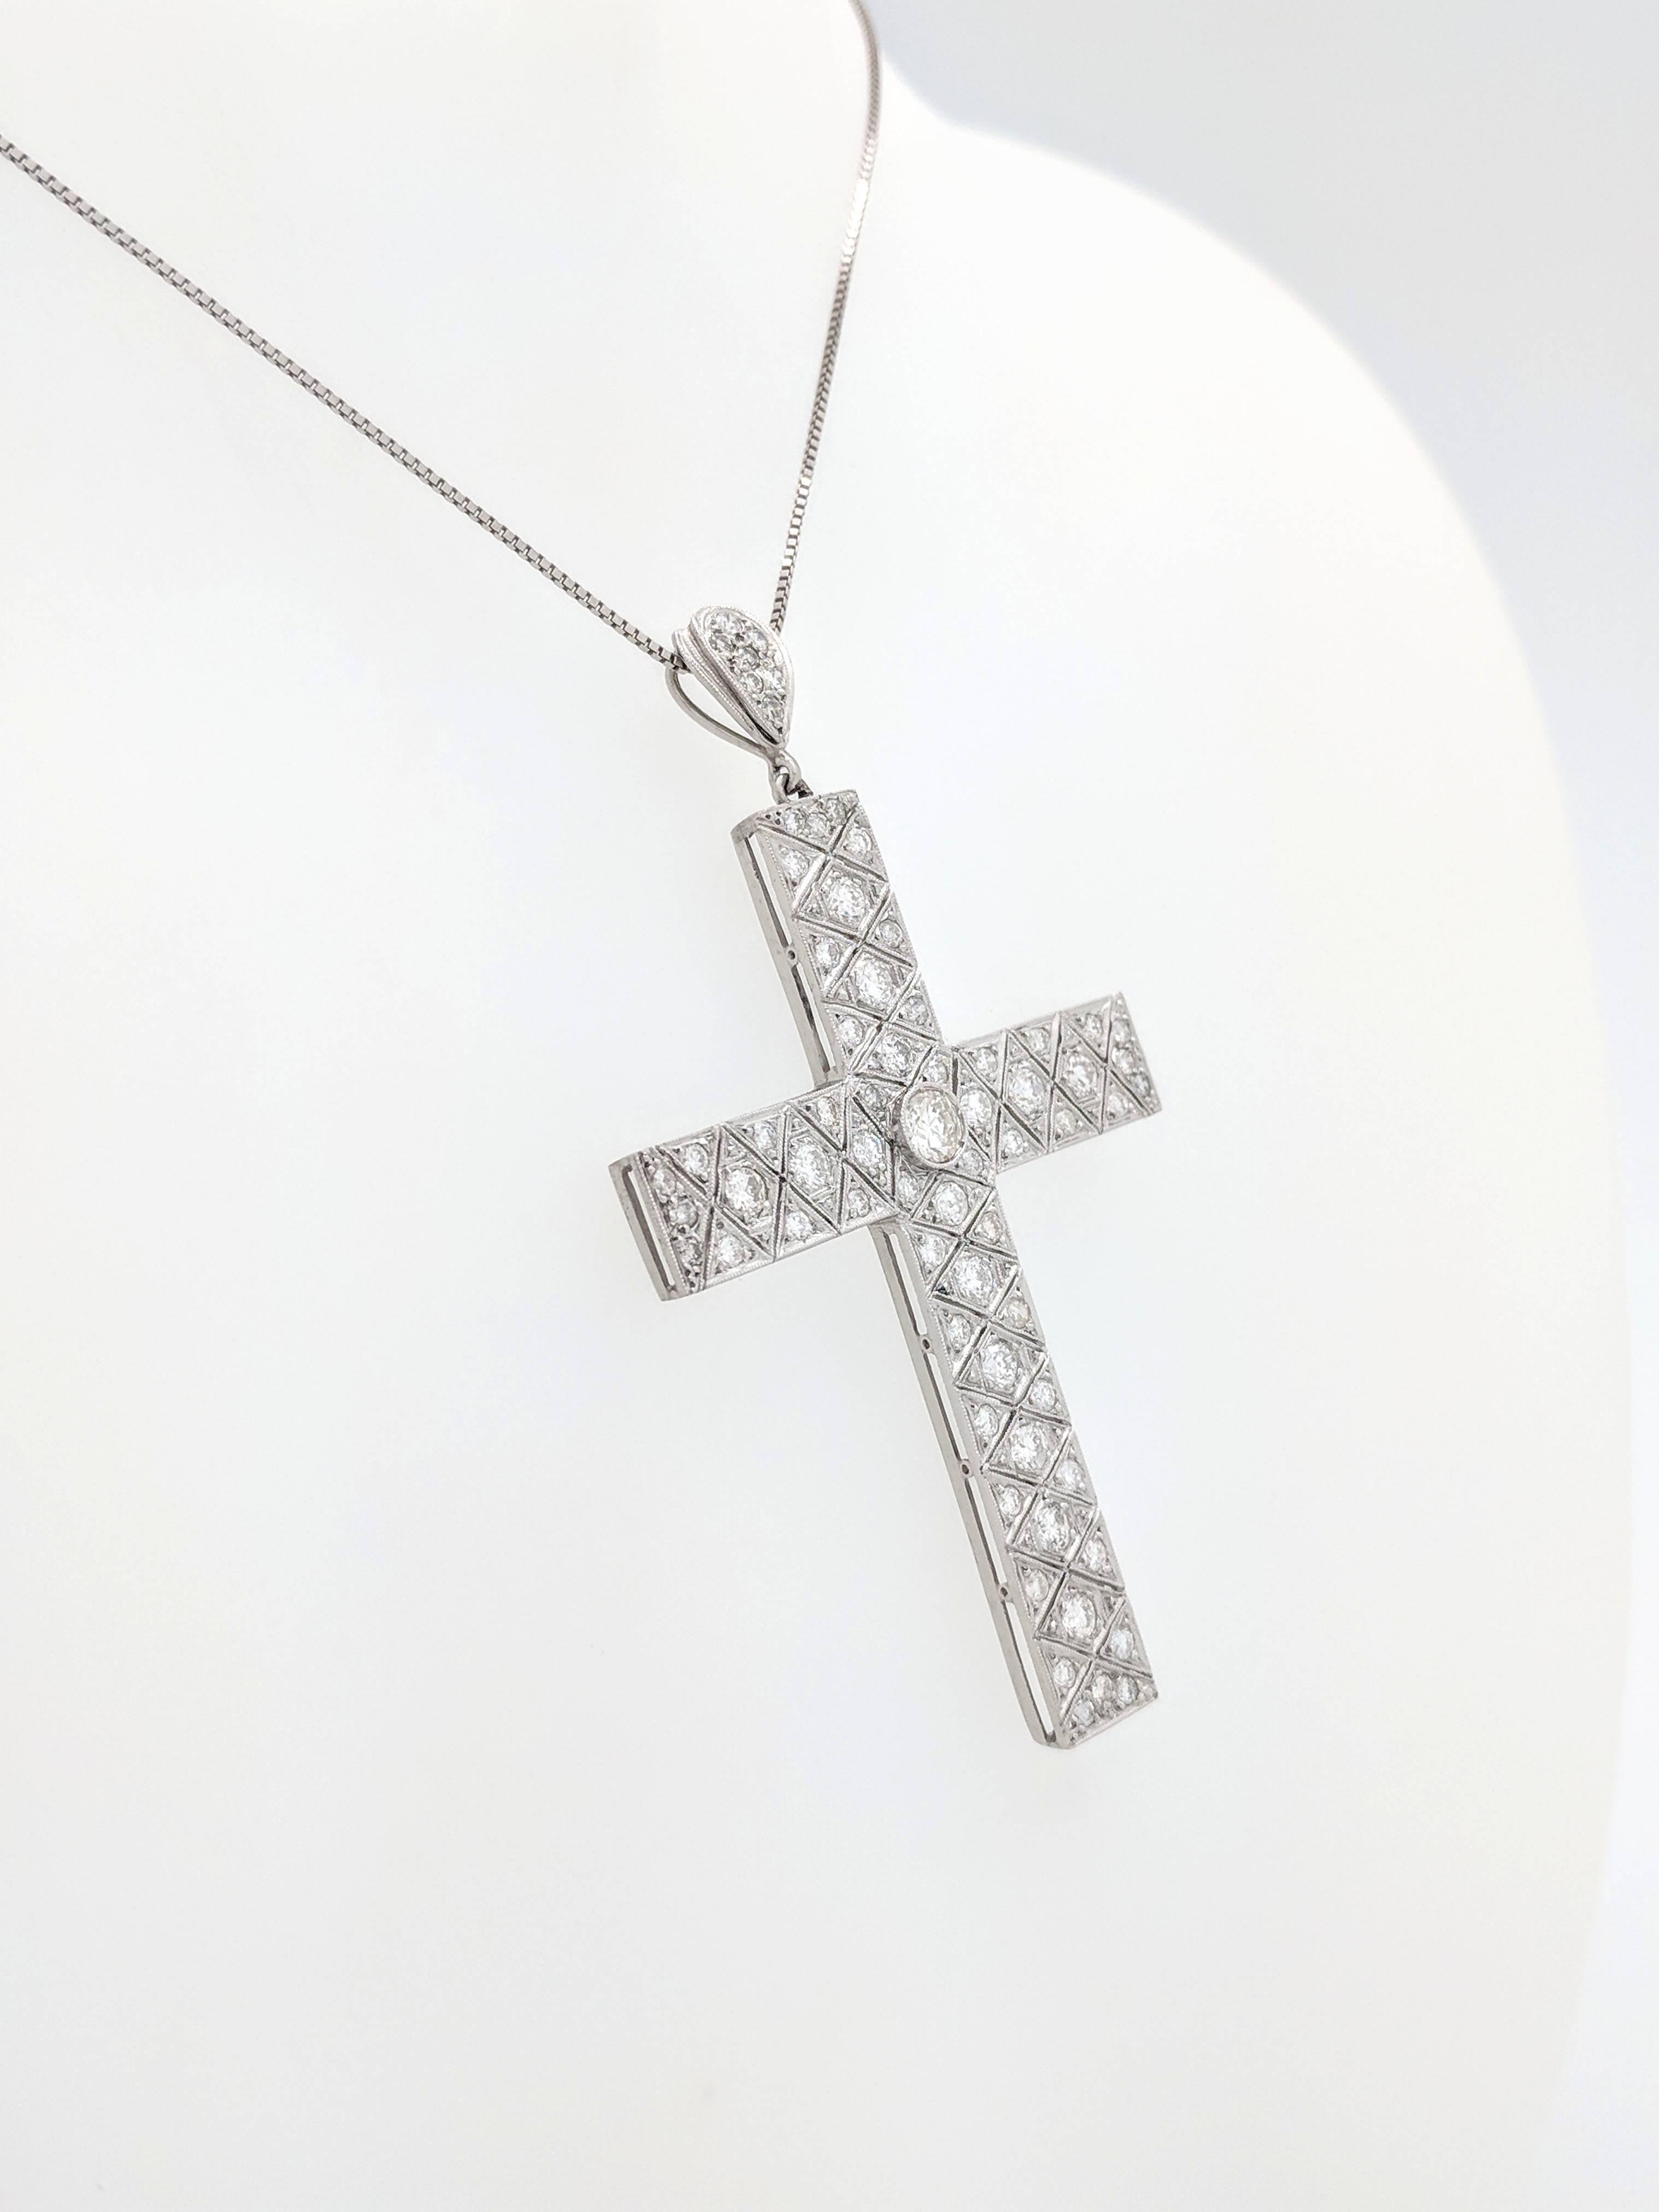 Round Cut Art Deco Filigree Platinum Diamond Cross Pendant Necklace 3.03ctw For Sale